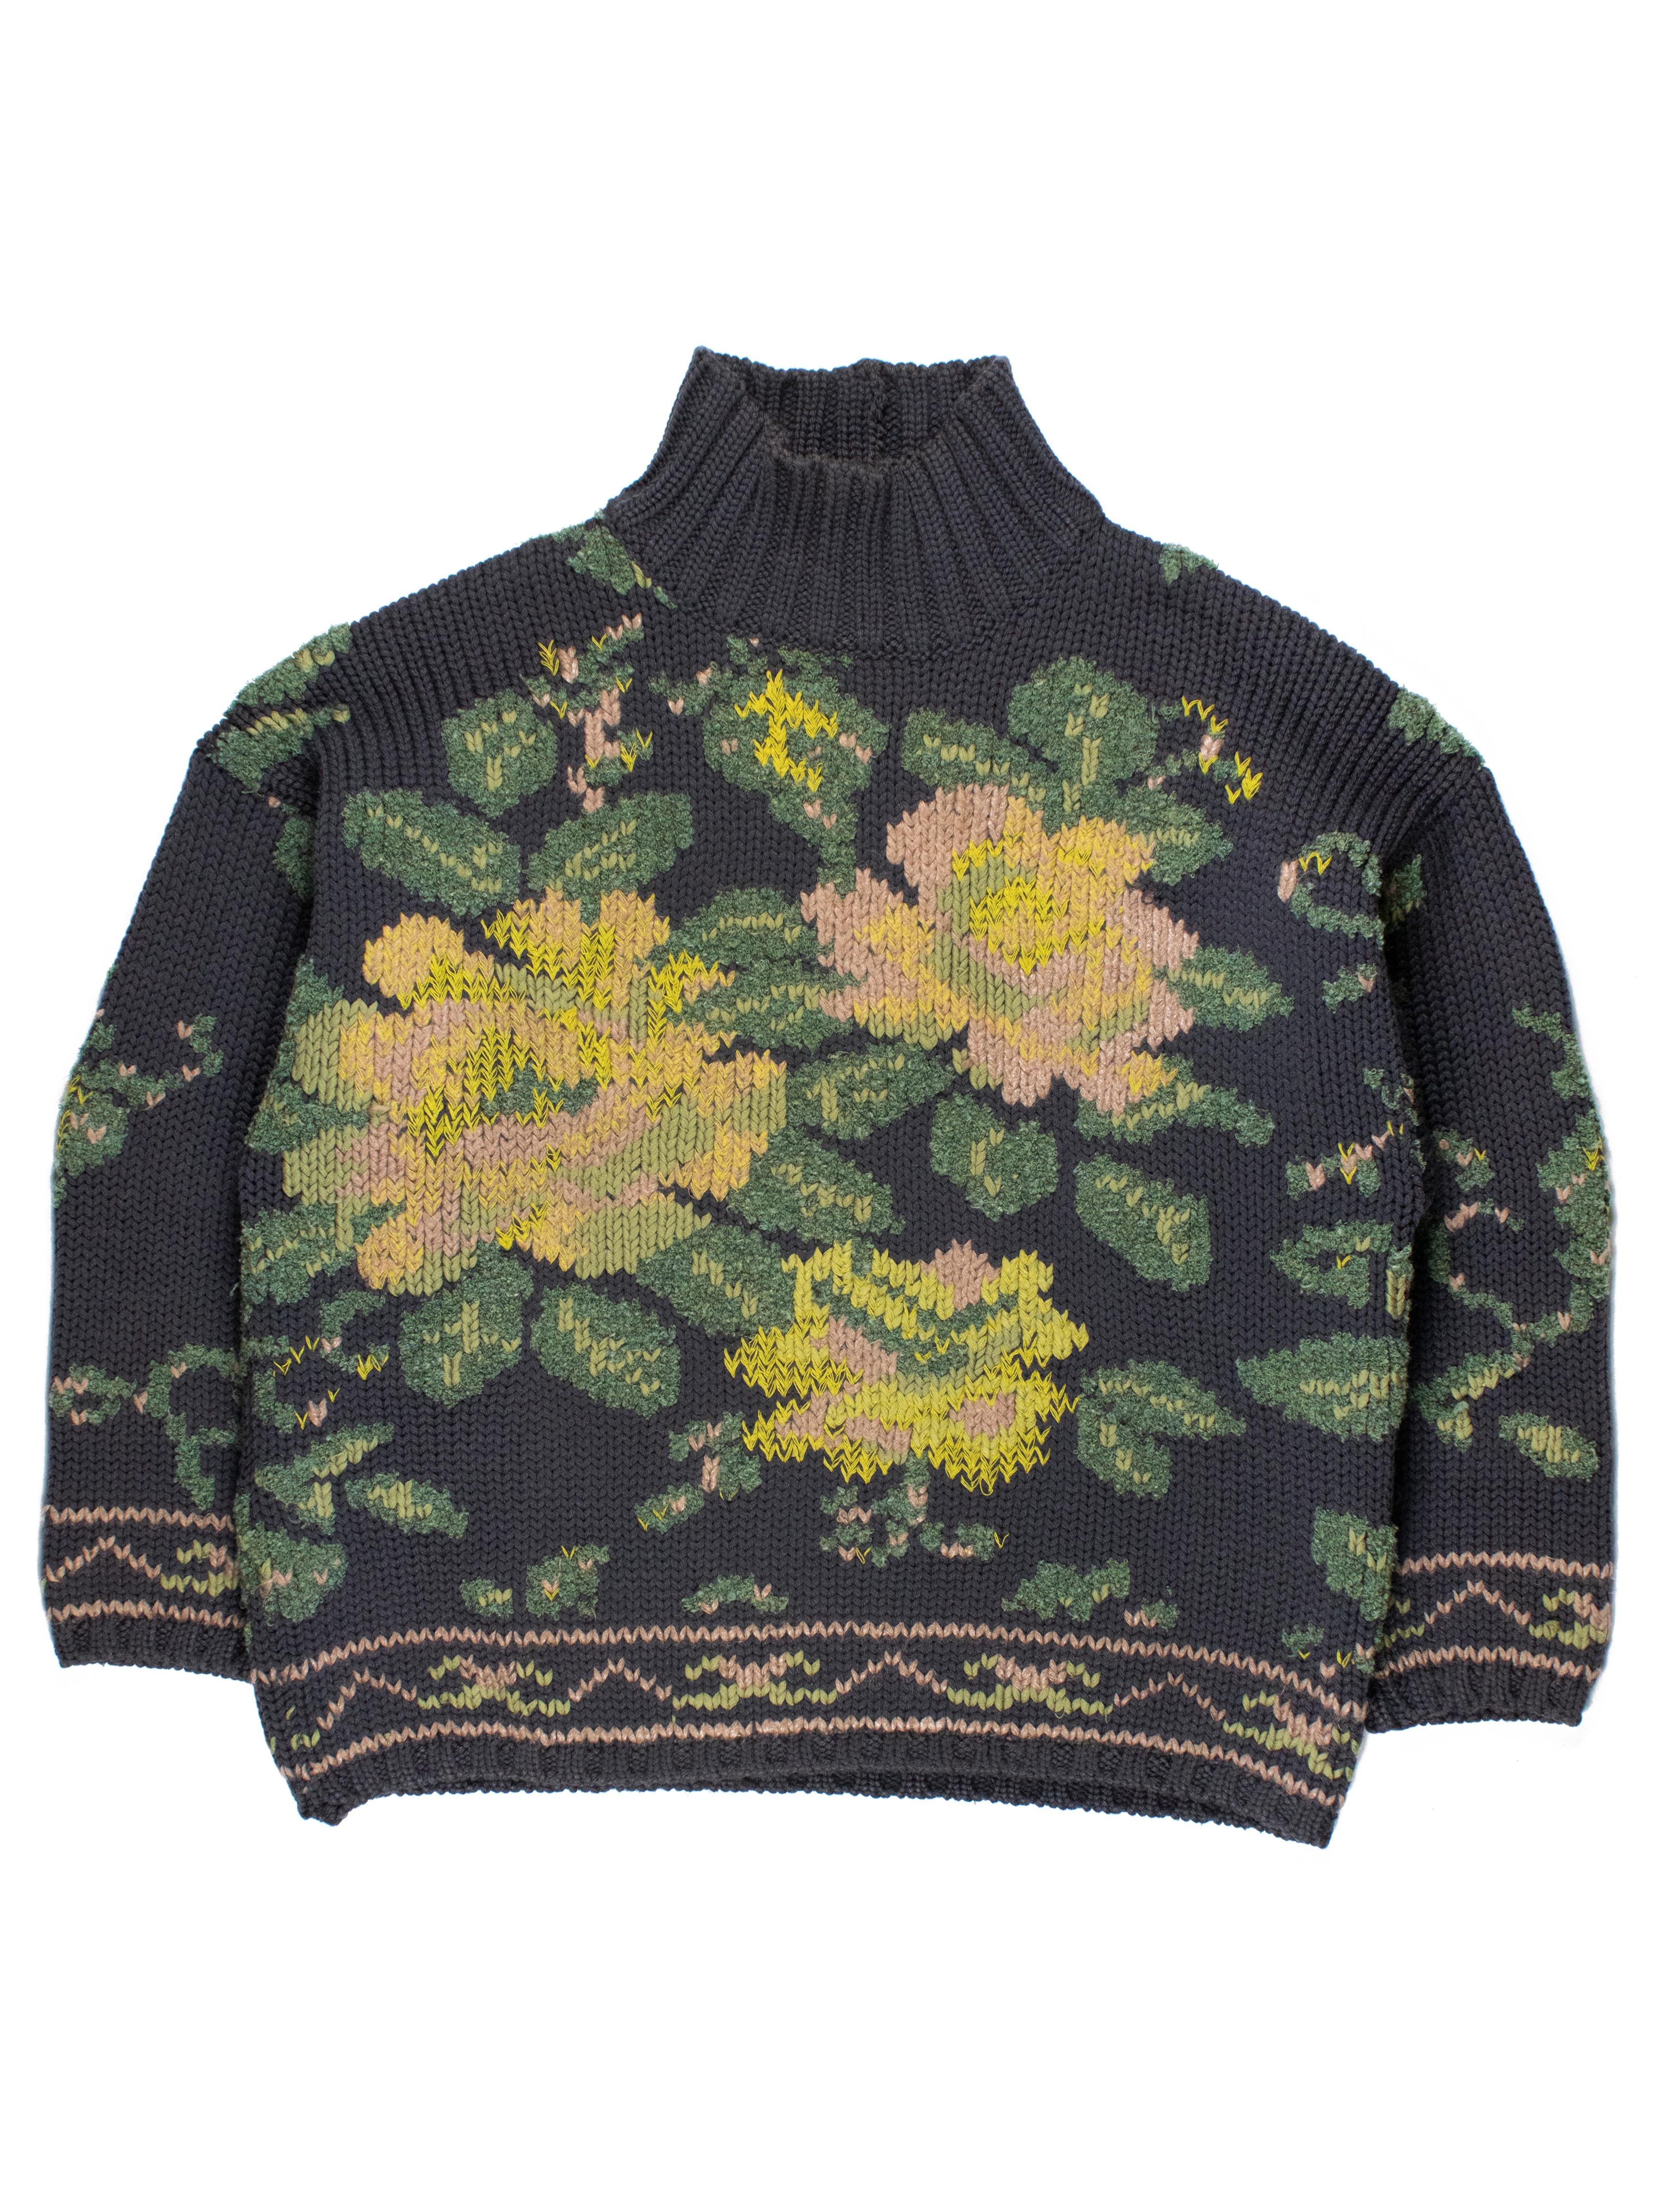 Black Jean Paul Gaultier AW1984 Floral Sweater